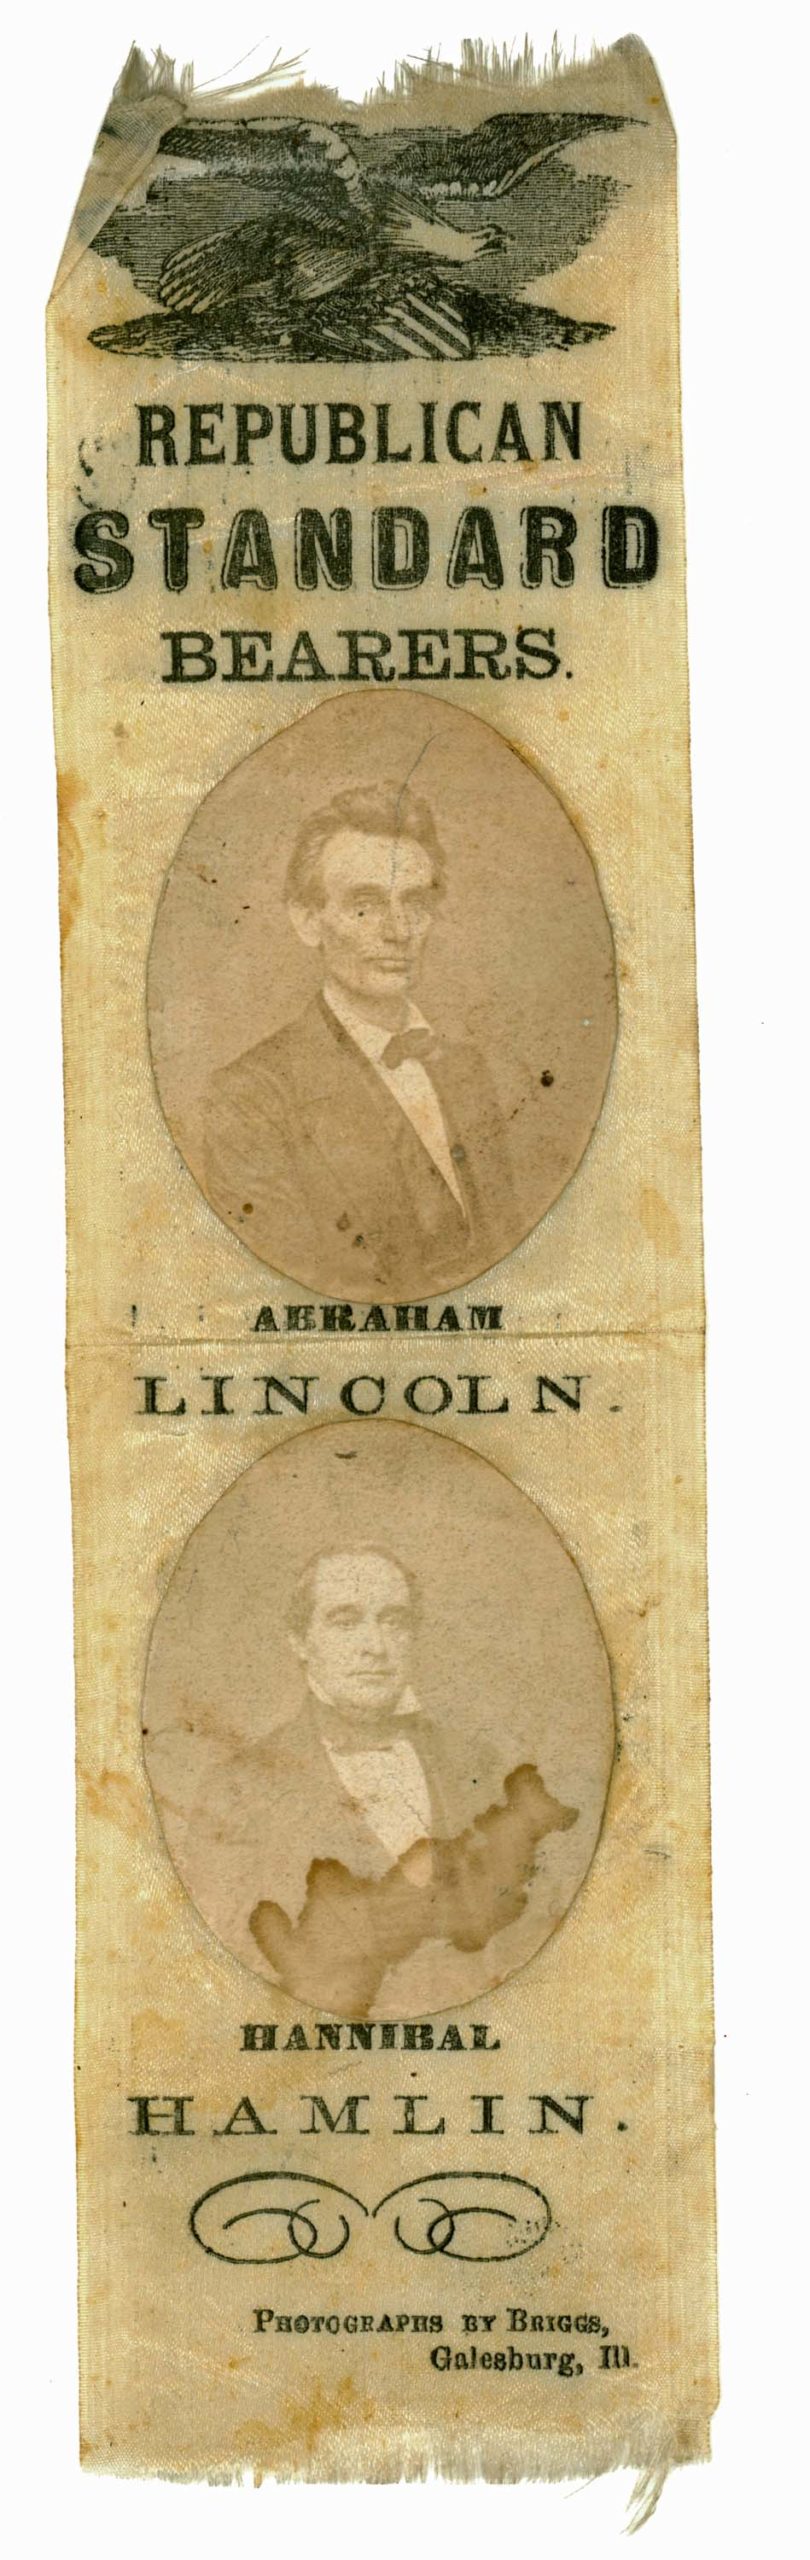 Newton Briggs, Republican Standard Bearers: Abraham Lincoln and Hannibal Hamlin, 1860, photoprints mounted on silk ribbon (Newberry Library)